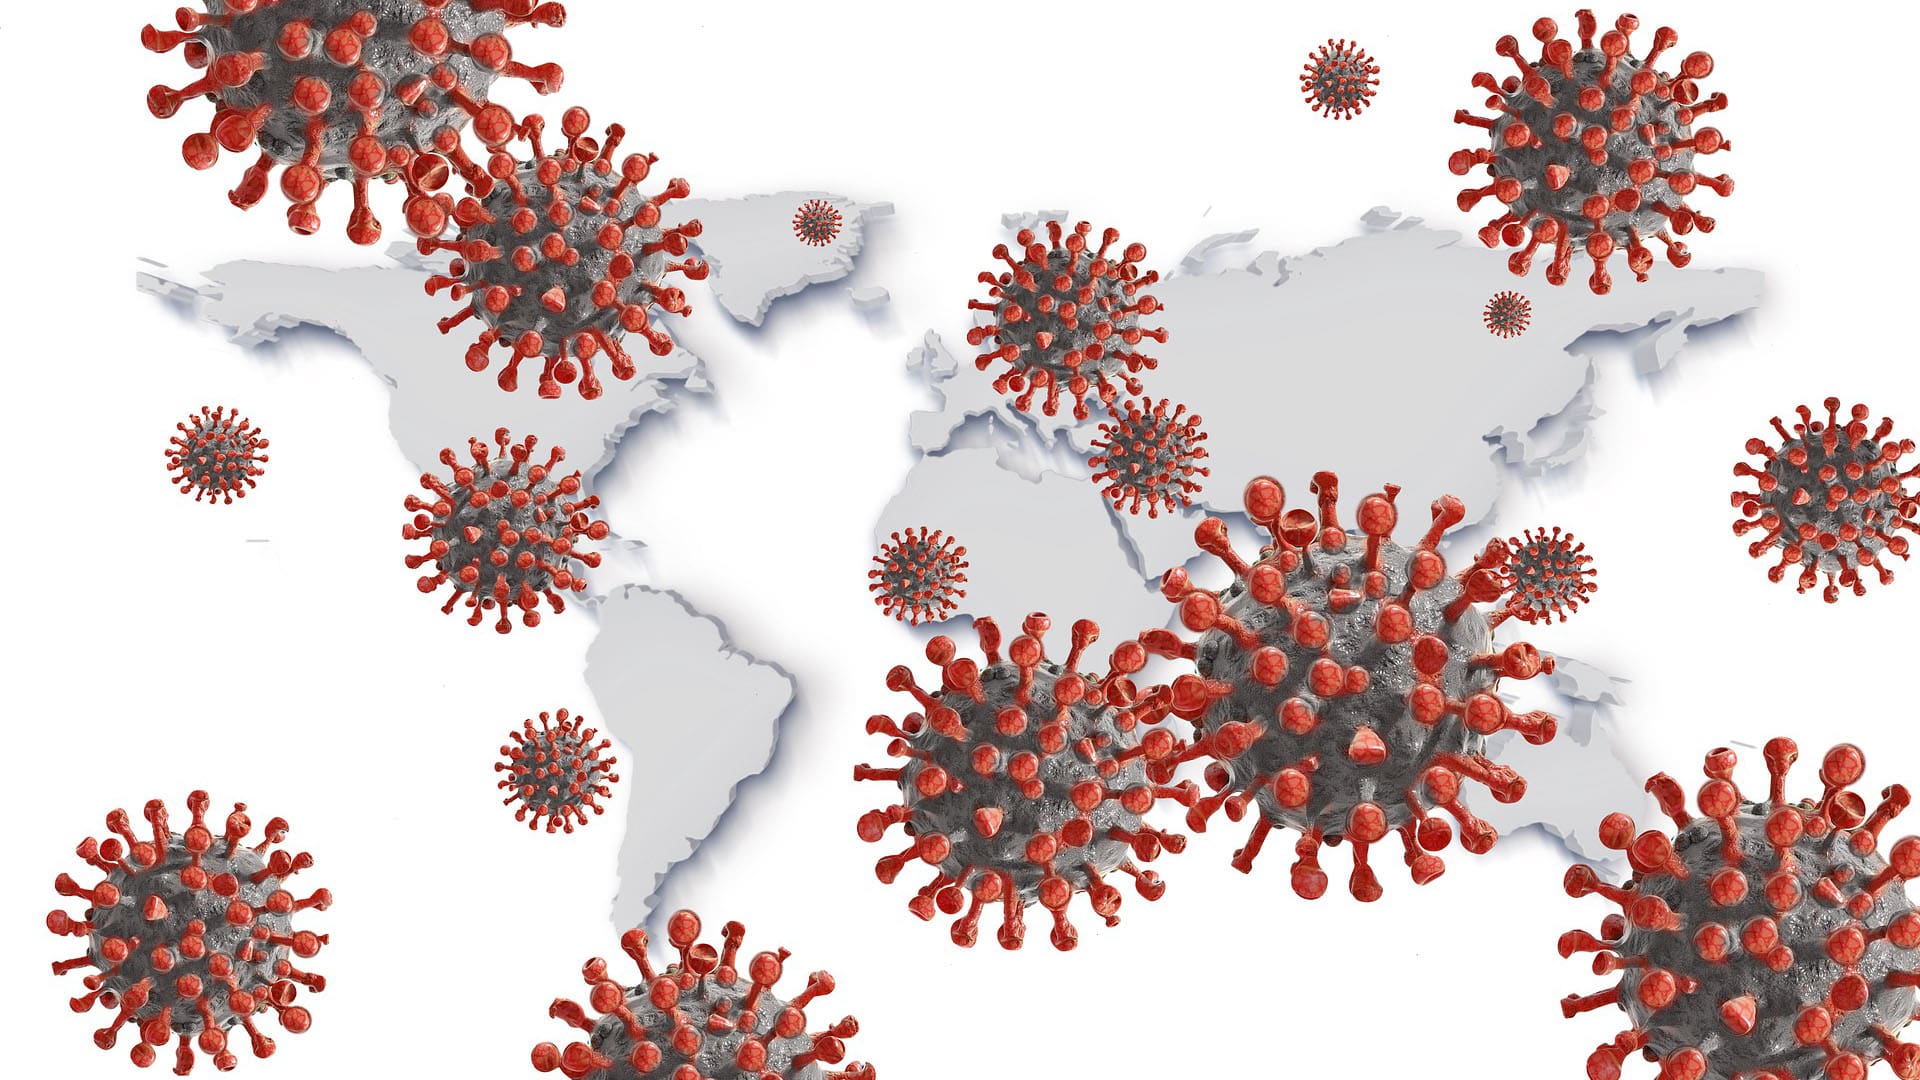 Illustration of Corona Virus and Global Map